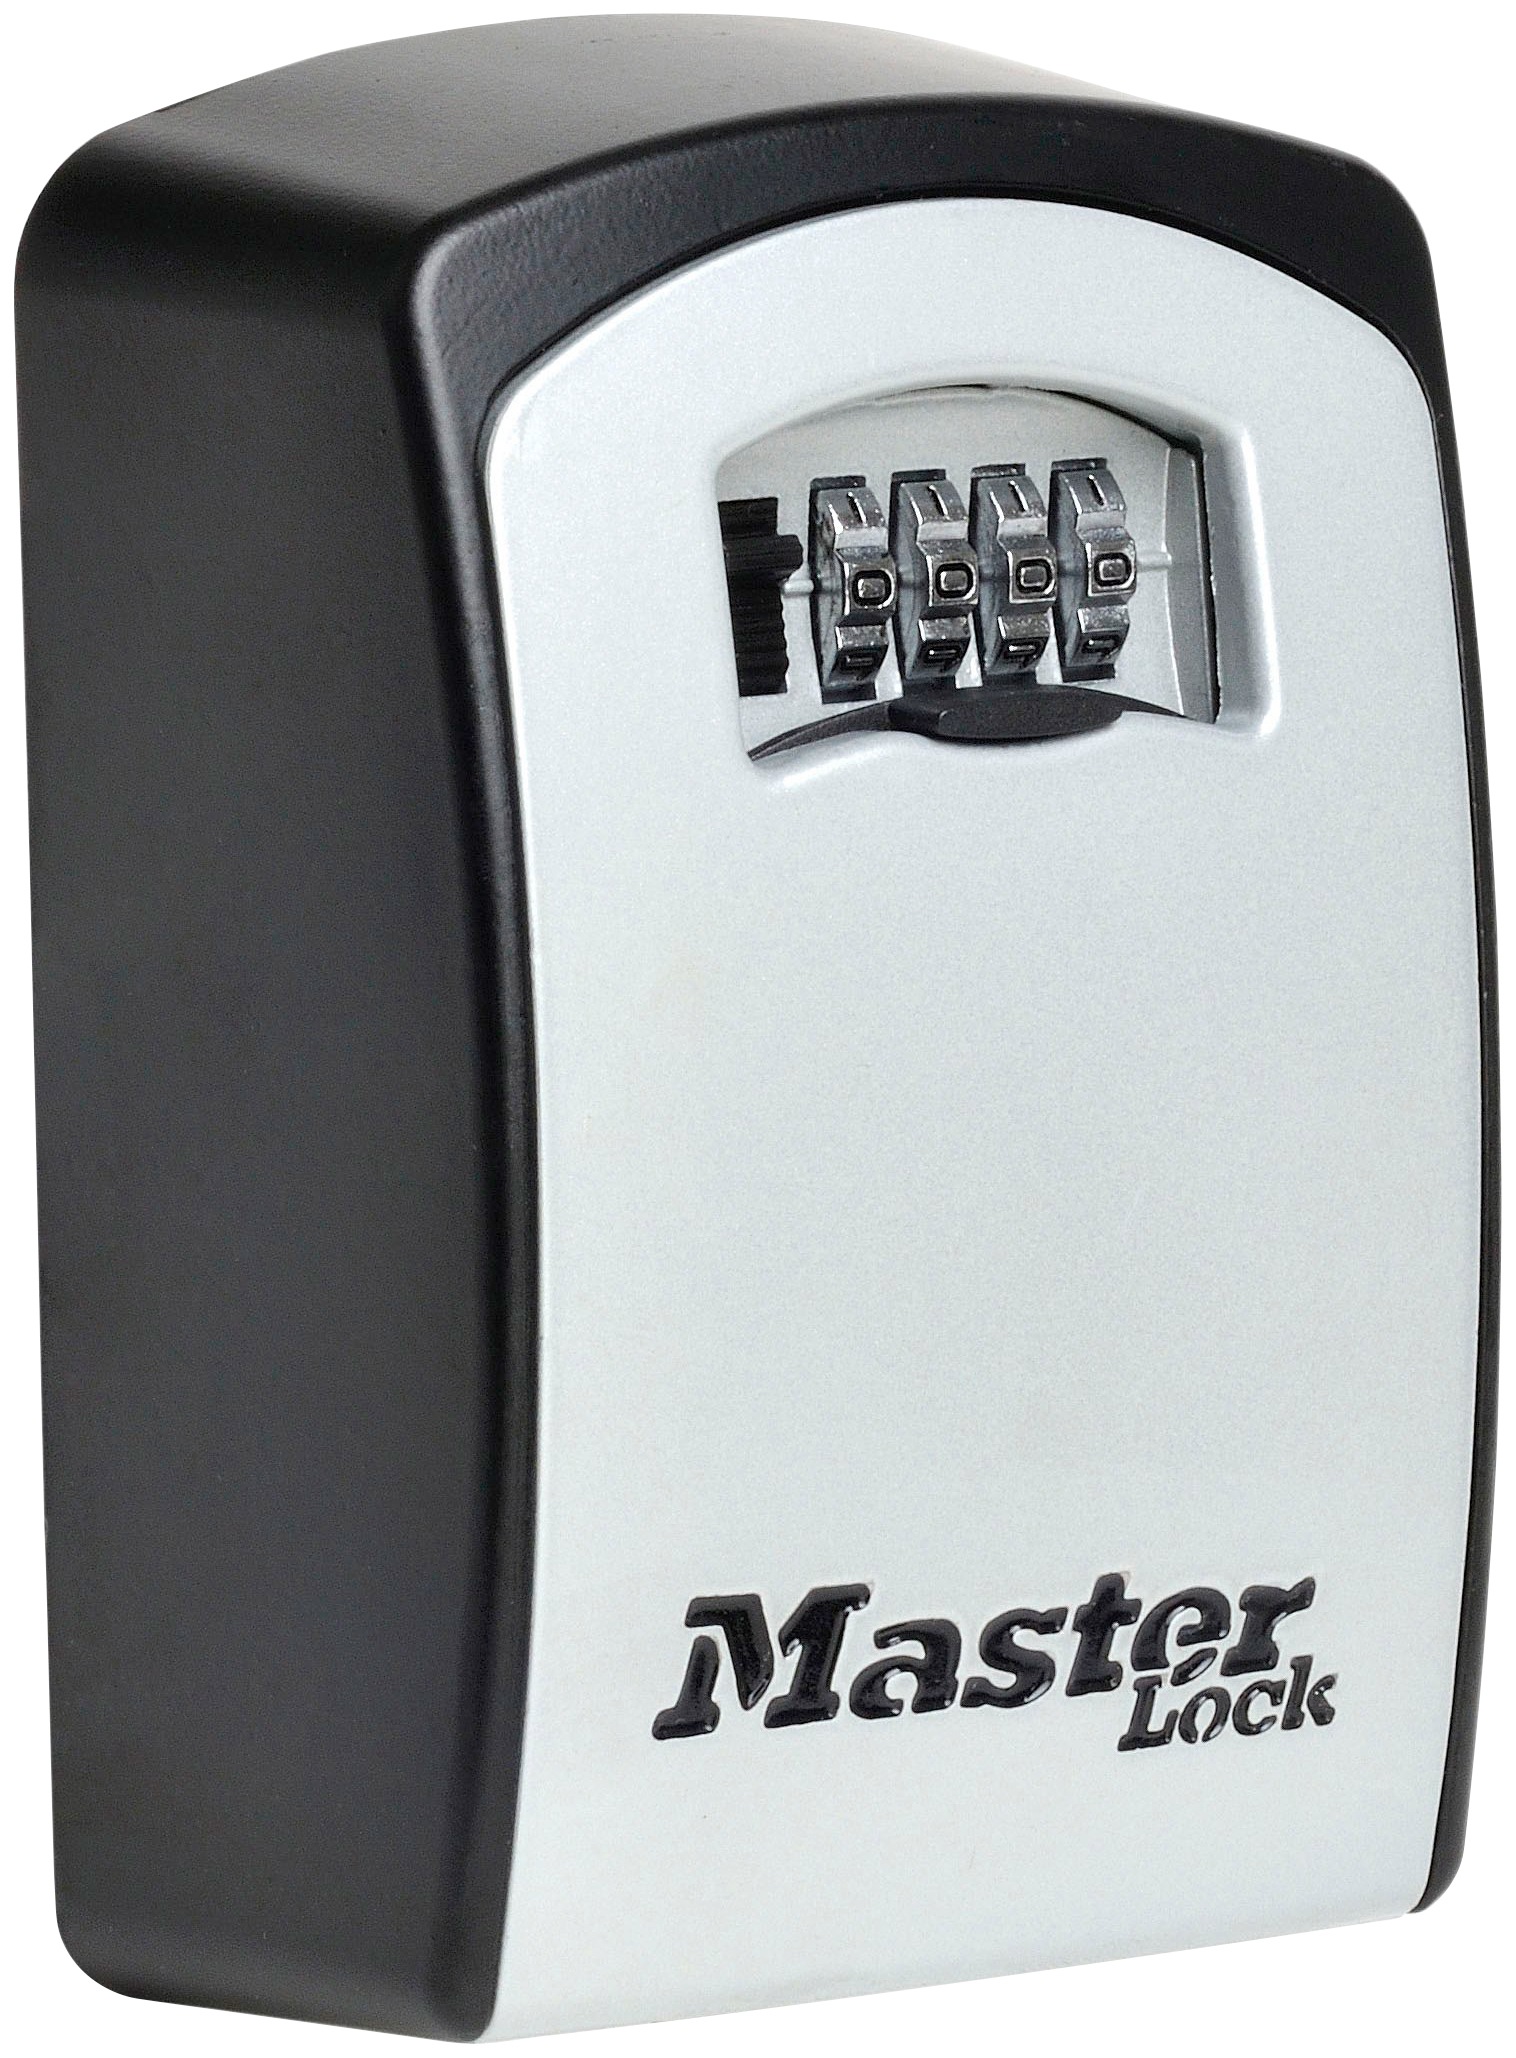 Master Lock Large Key Lock Box.